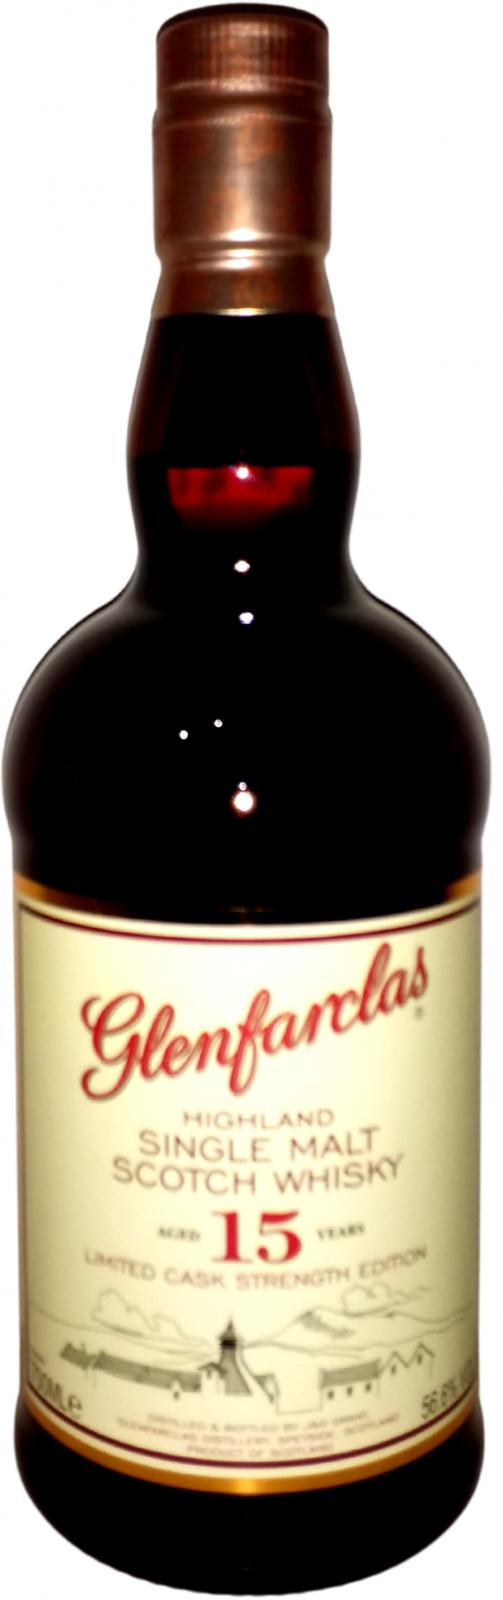 Glenfarclas Limited Cask Strength Edition 15 Year Old 2019 Release Single Malt Scotch Whisky | 700ML